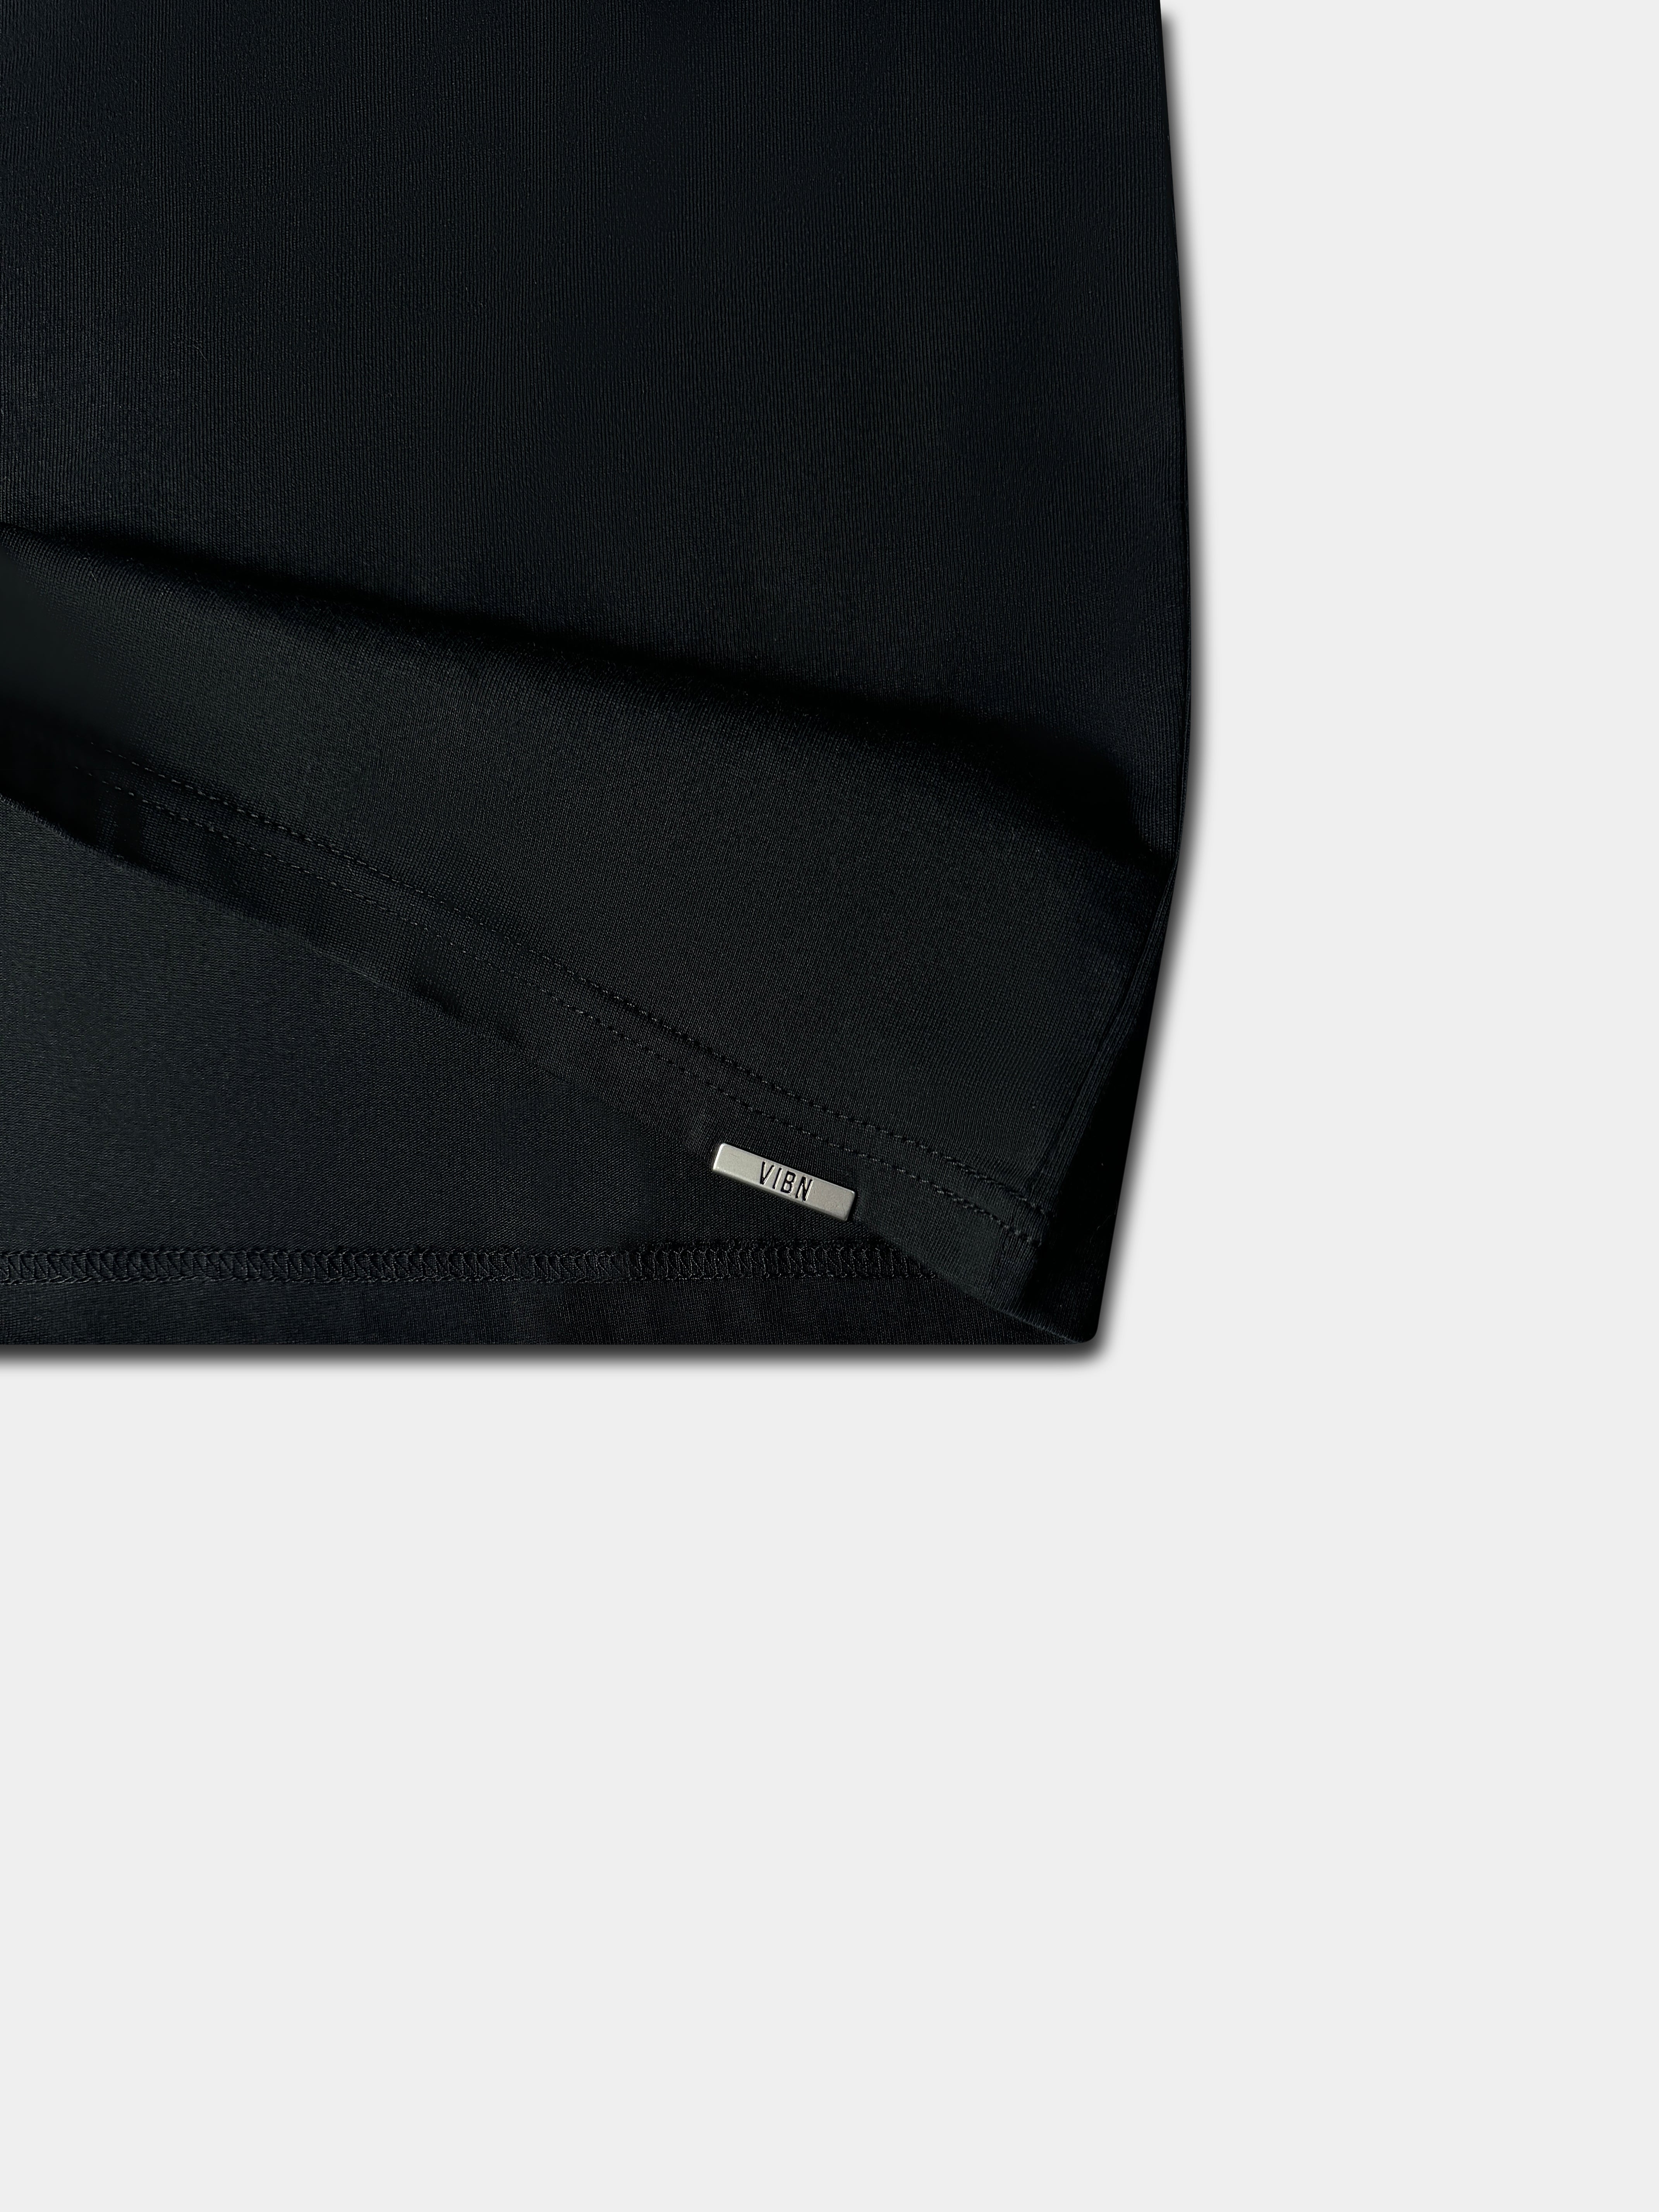 Vibn Luxury Heavyweight Blank T-Shirt - Black